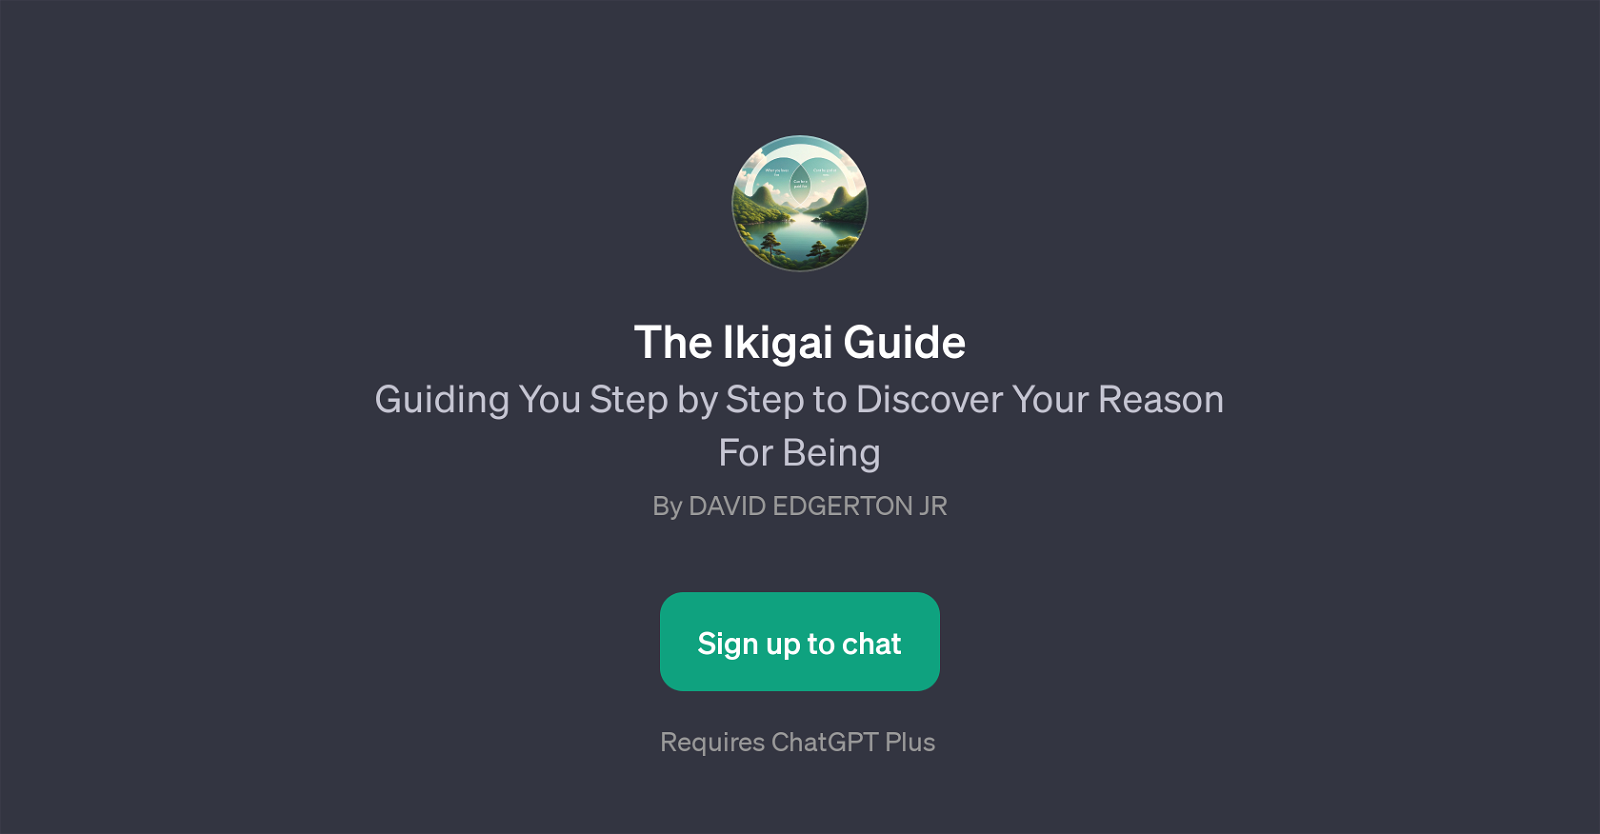 The Ikigai Guide website